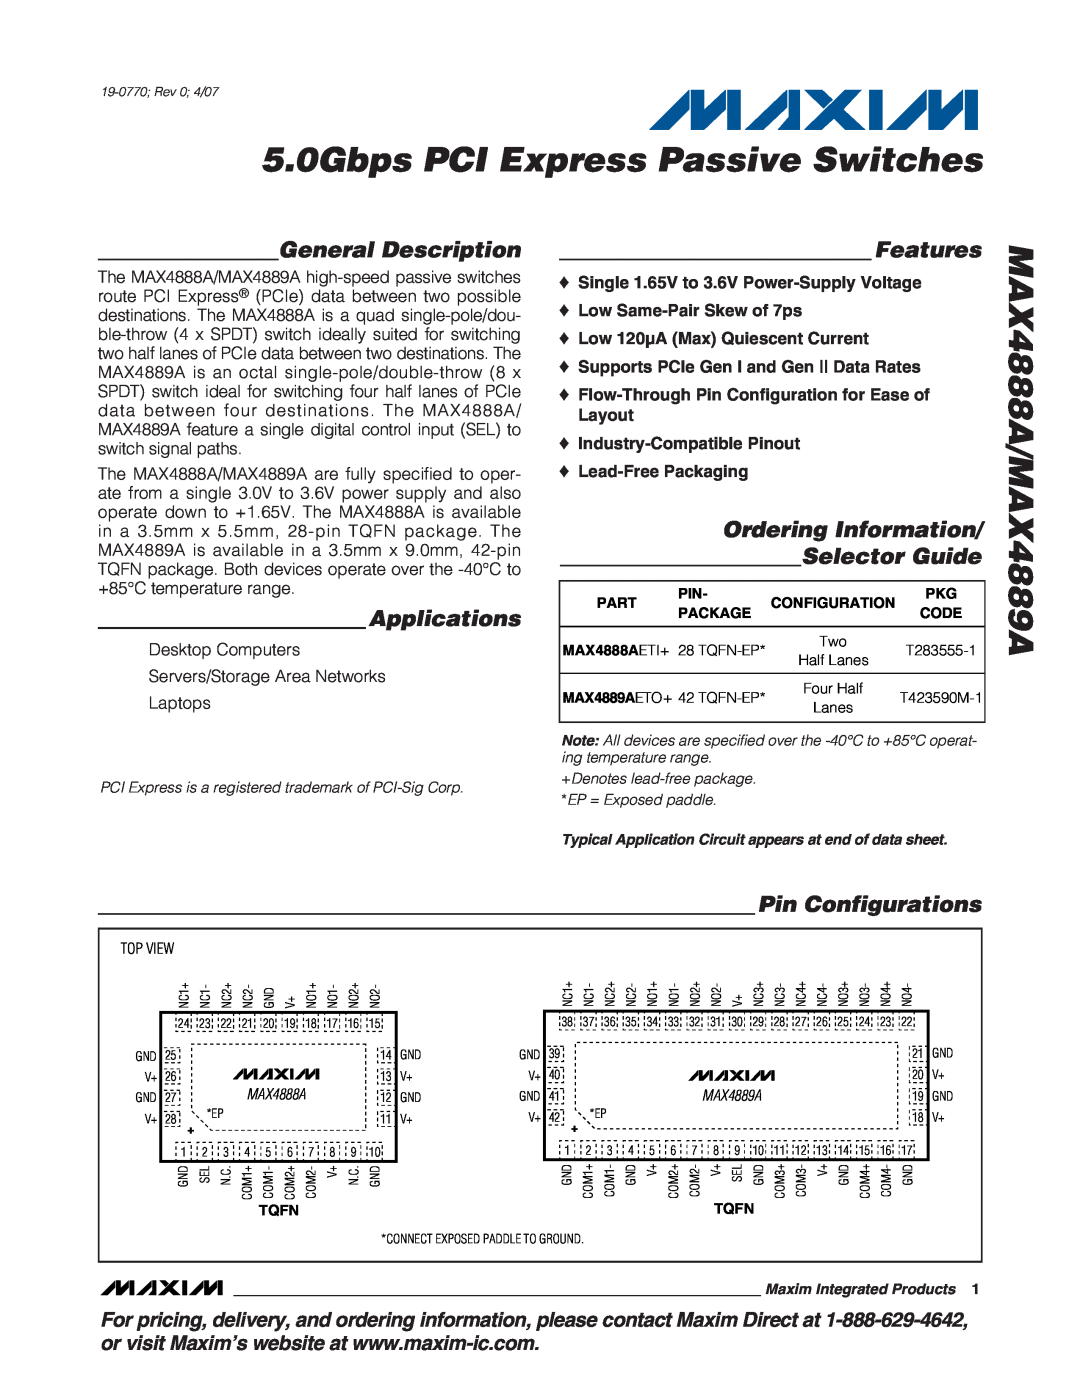 Maxim manual 5.0Gbps PCI Express Passive Switches, MAX4888A/MAX4889A, General Description, Applications, Features 